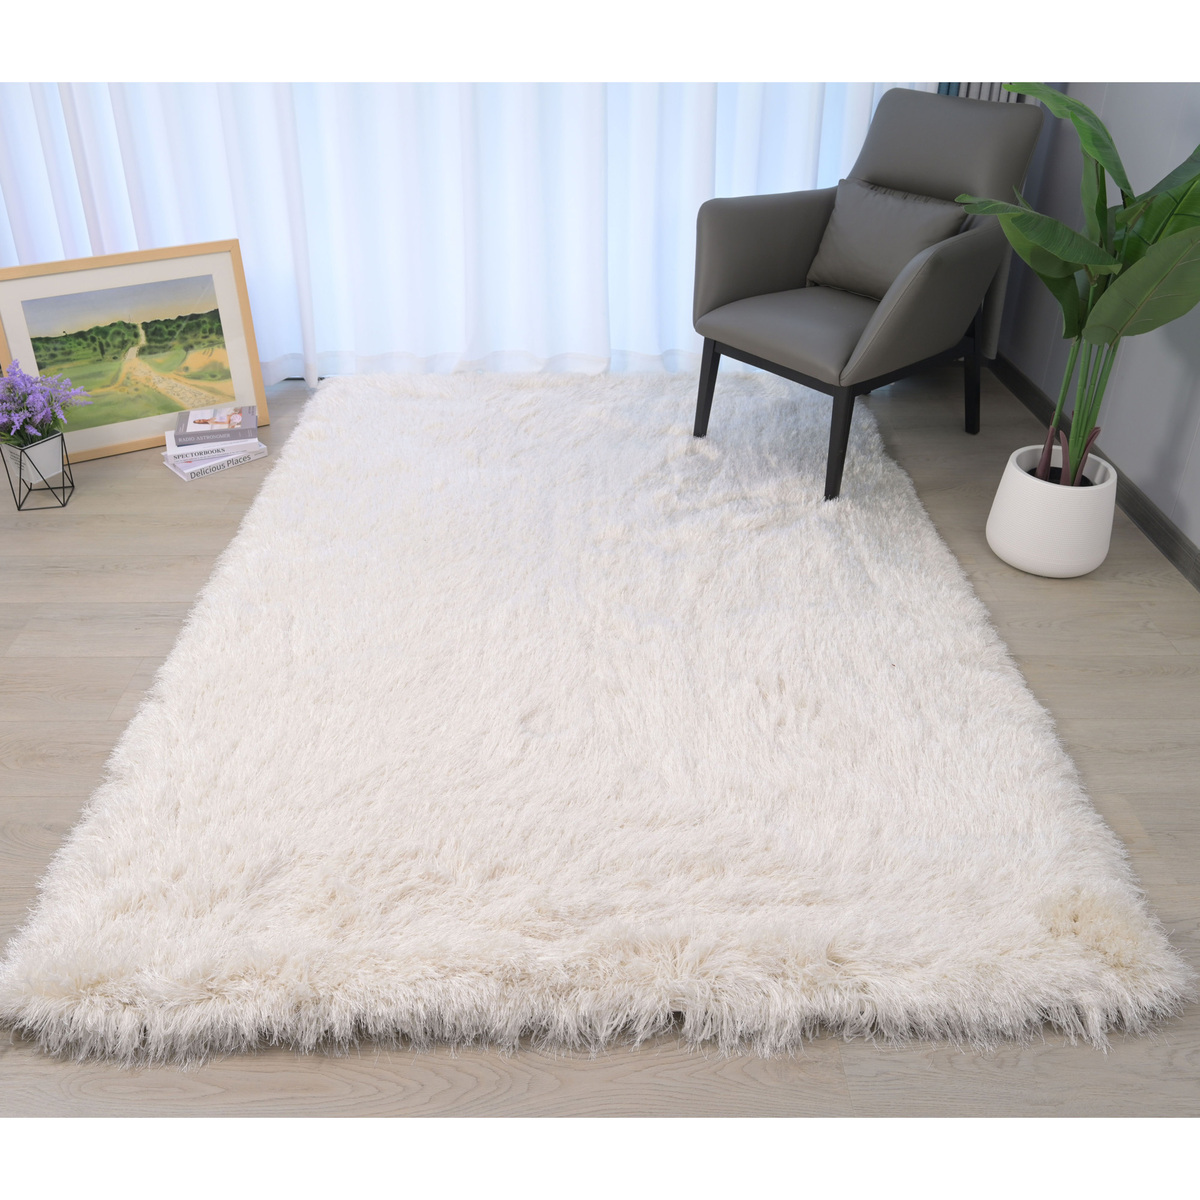 Maple Leaf Soft Non-slip Shaggy Carpet 120x160cm Ivory